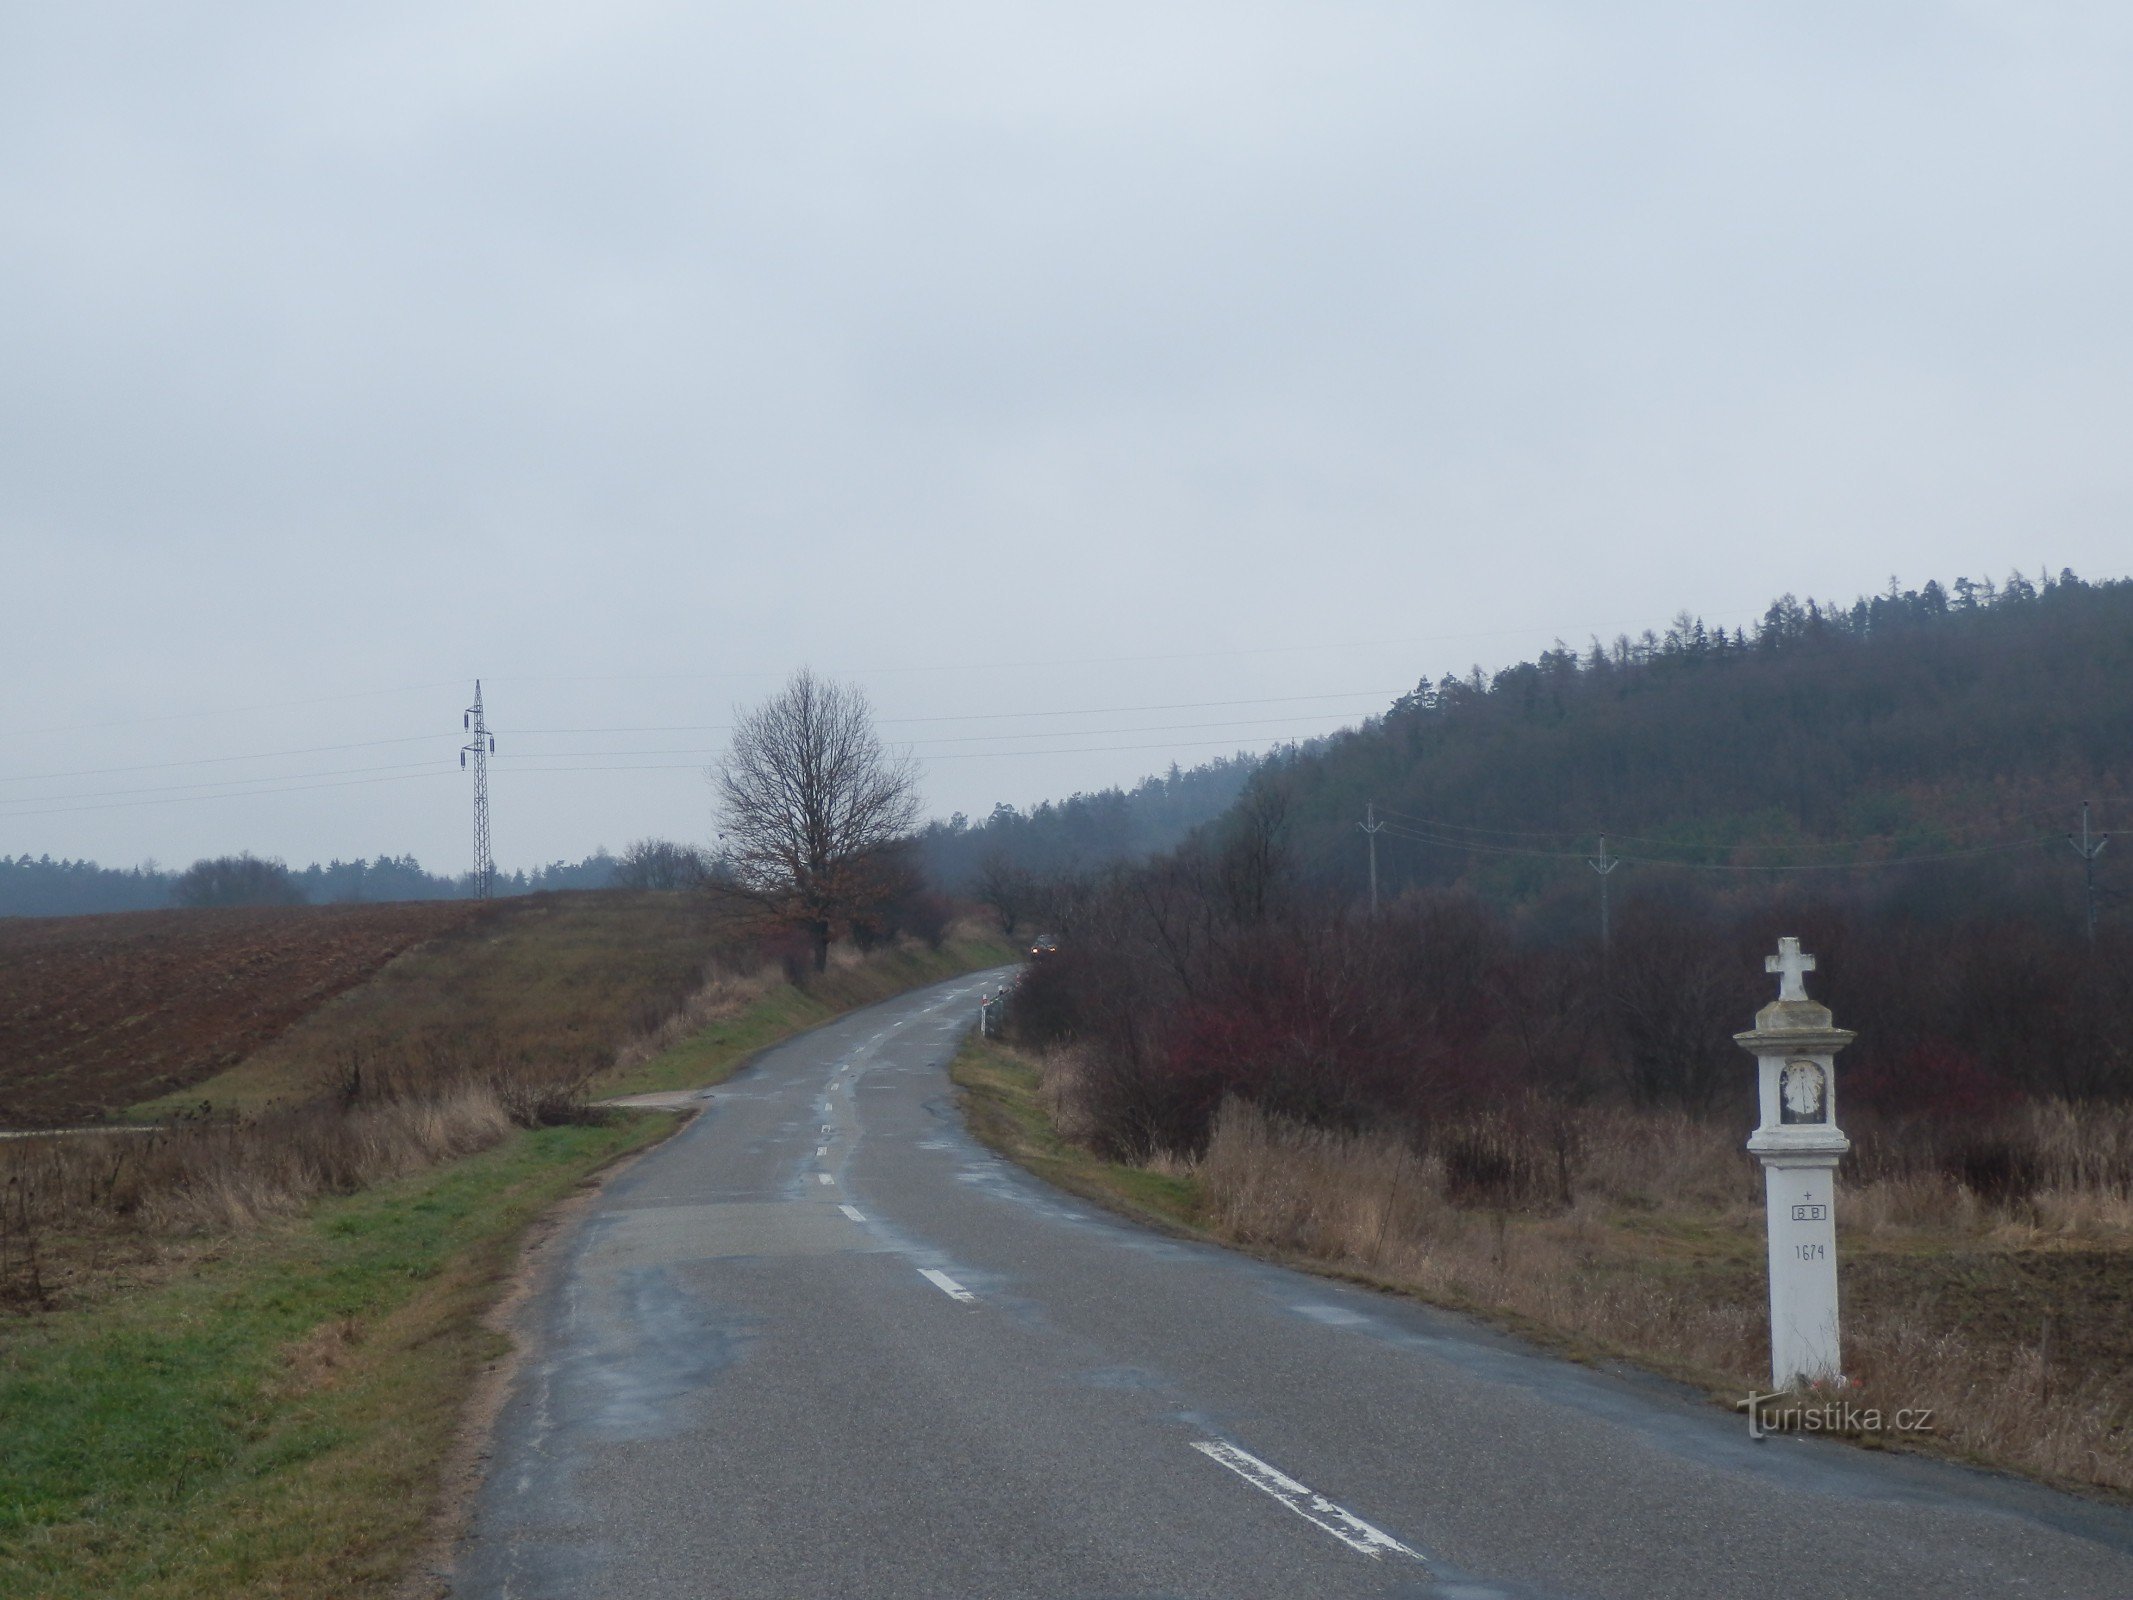 Fra Jehnice til Lelekovice og Mokré Hora